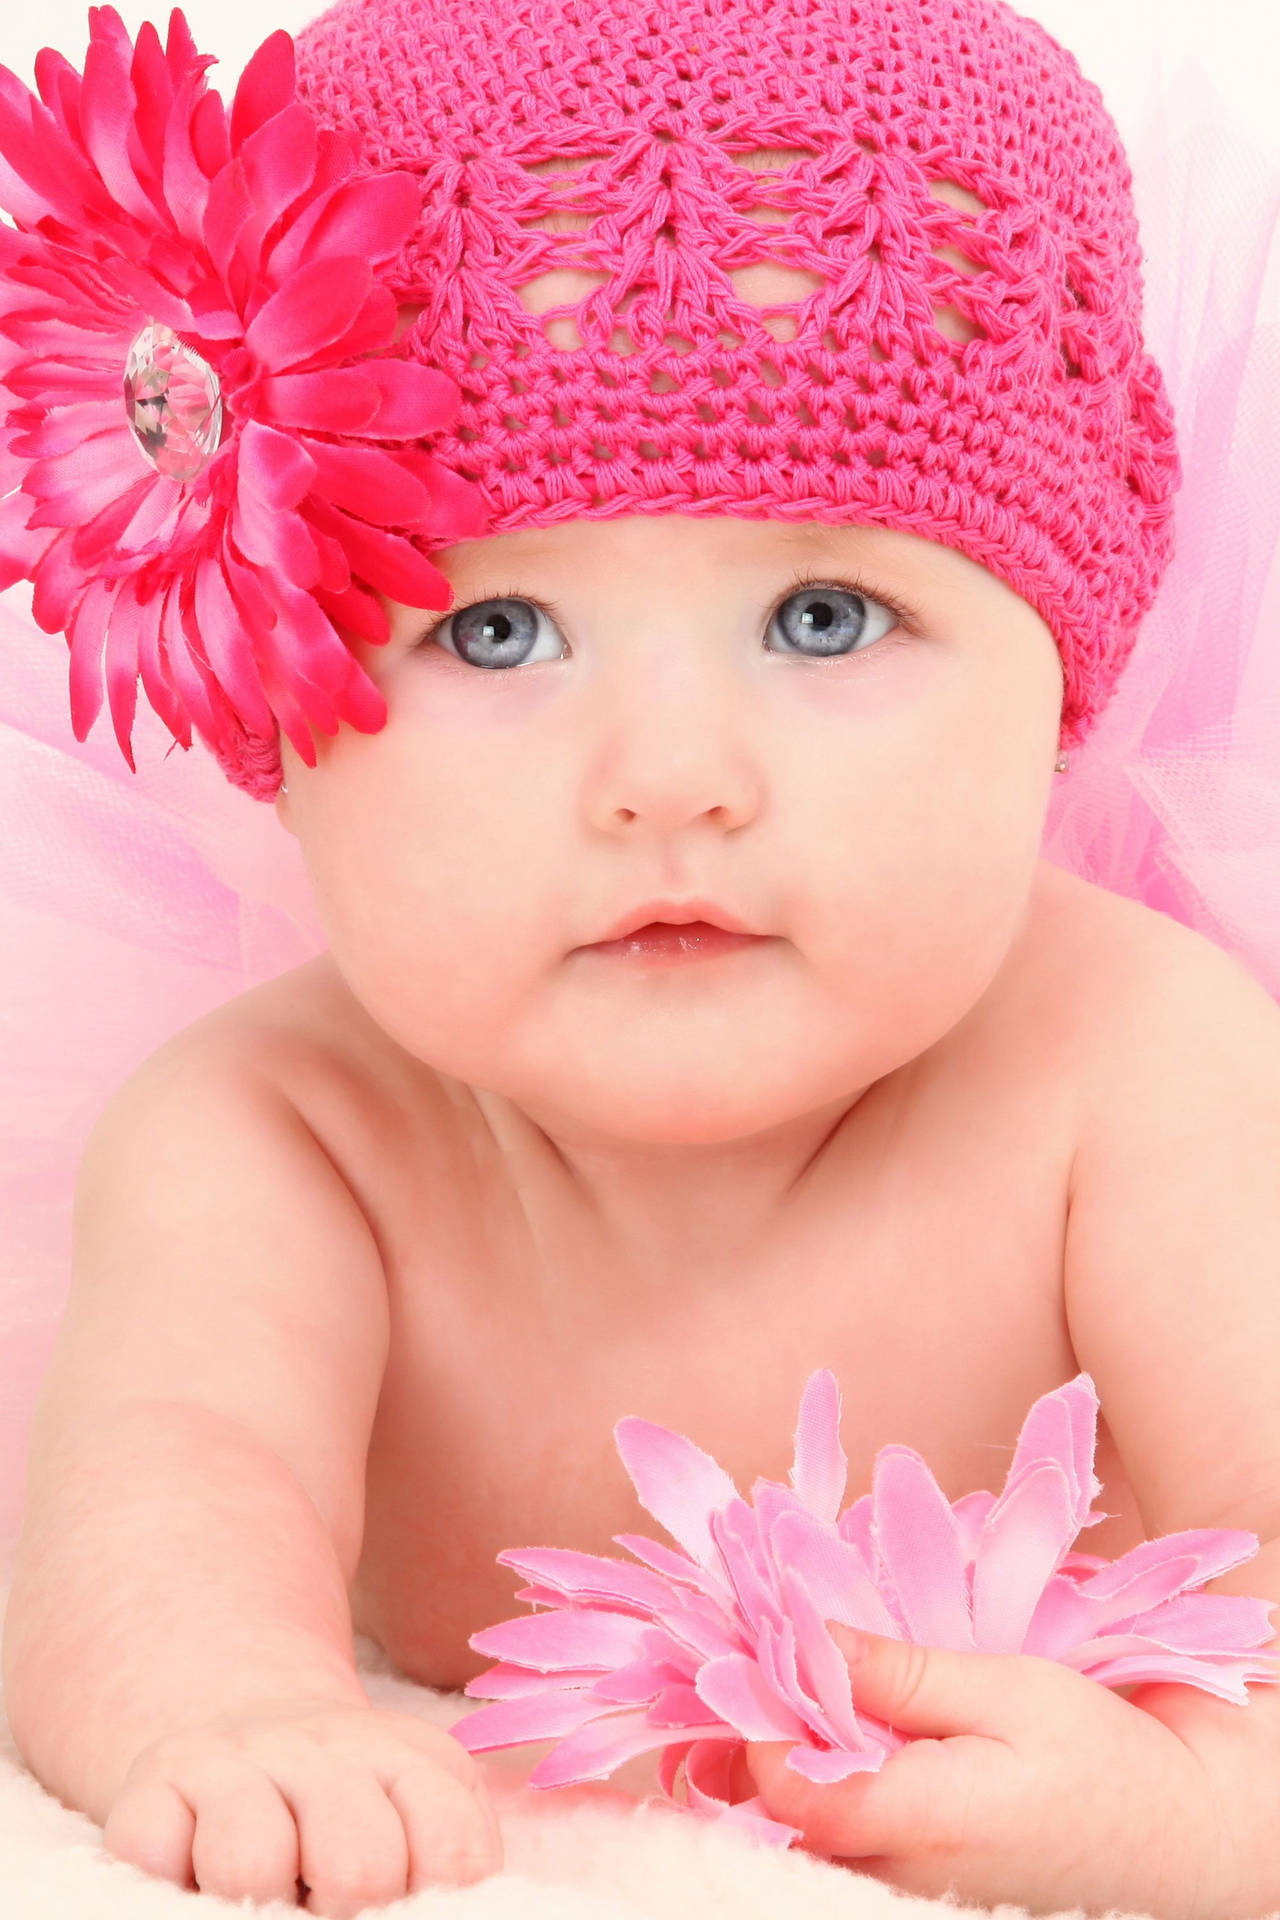 Baby smiles in sweet pink crochet bonnet Wallpaper